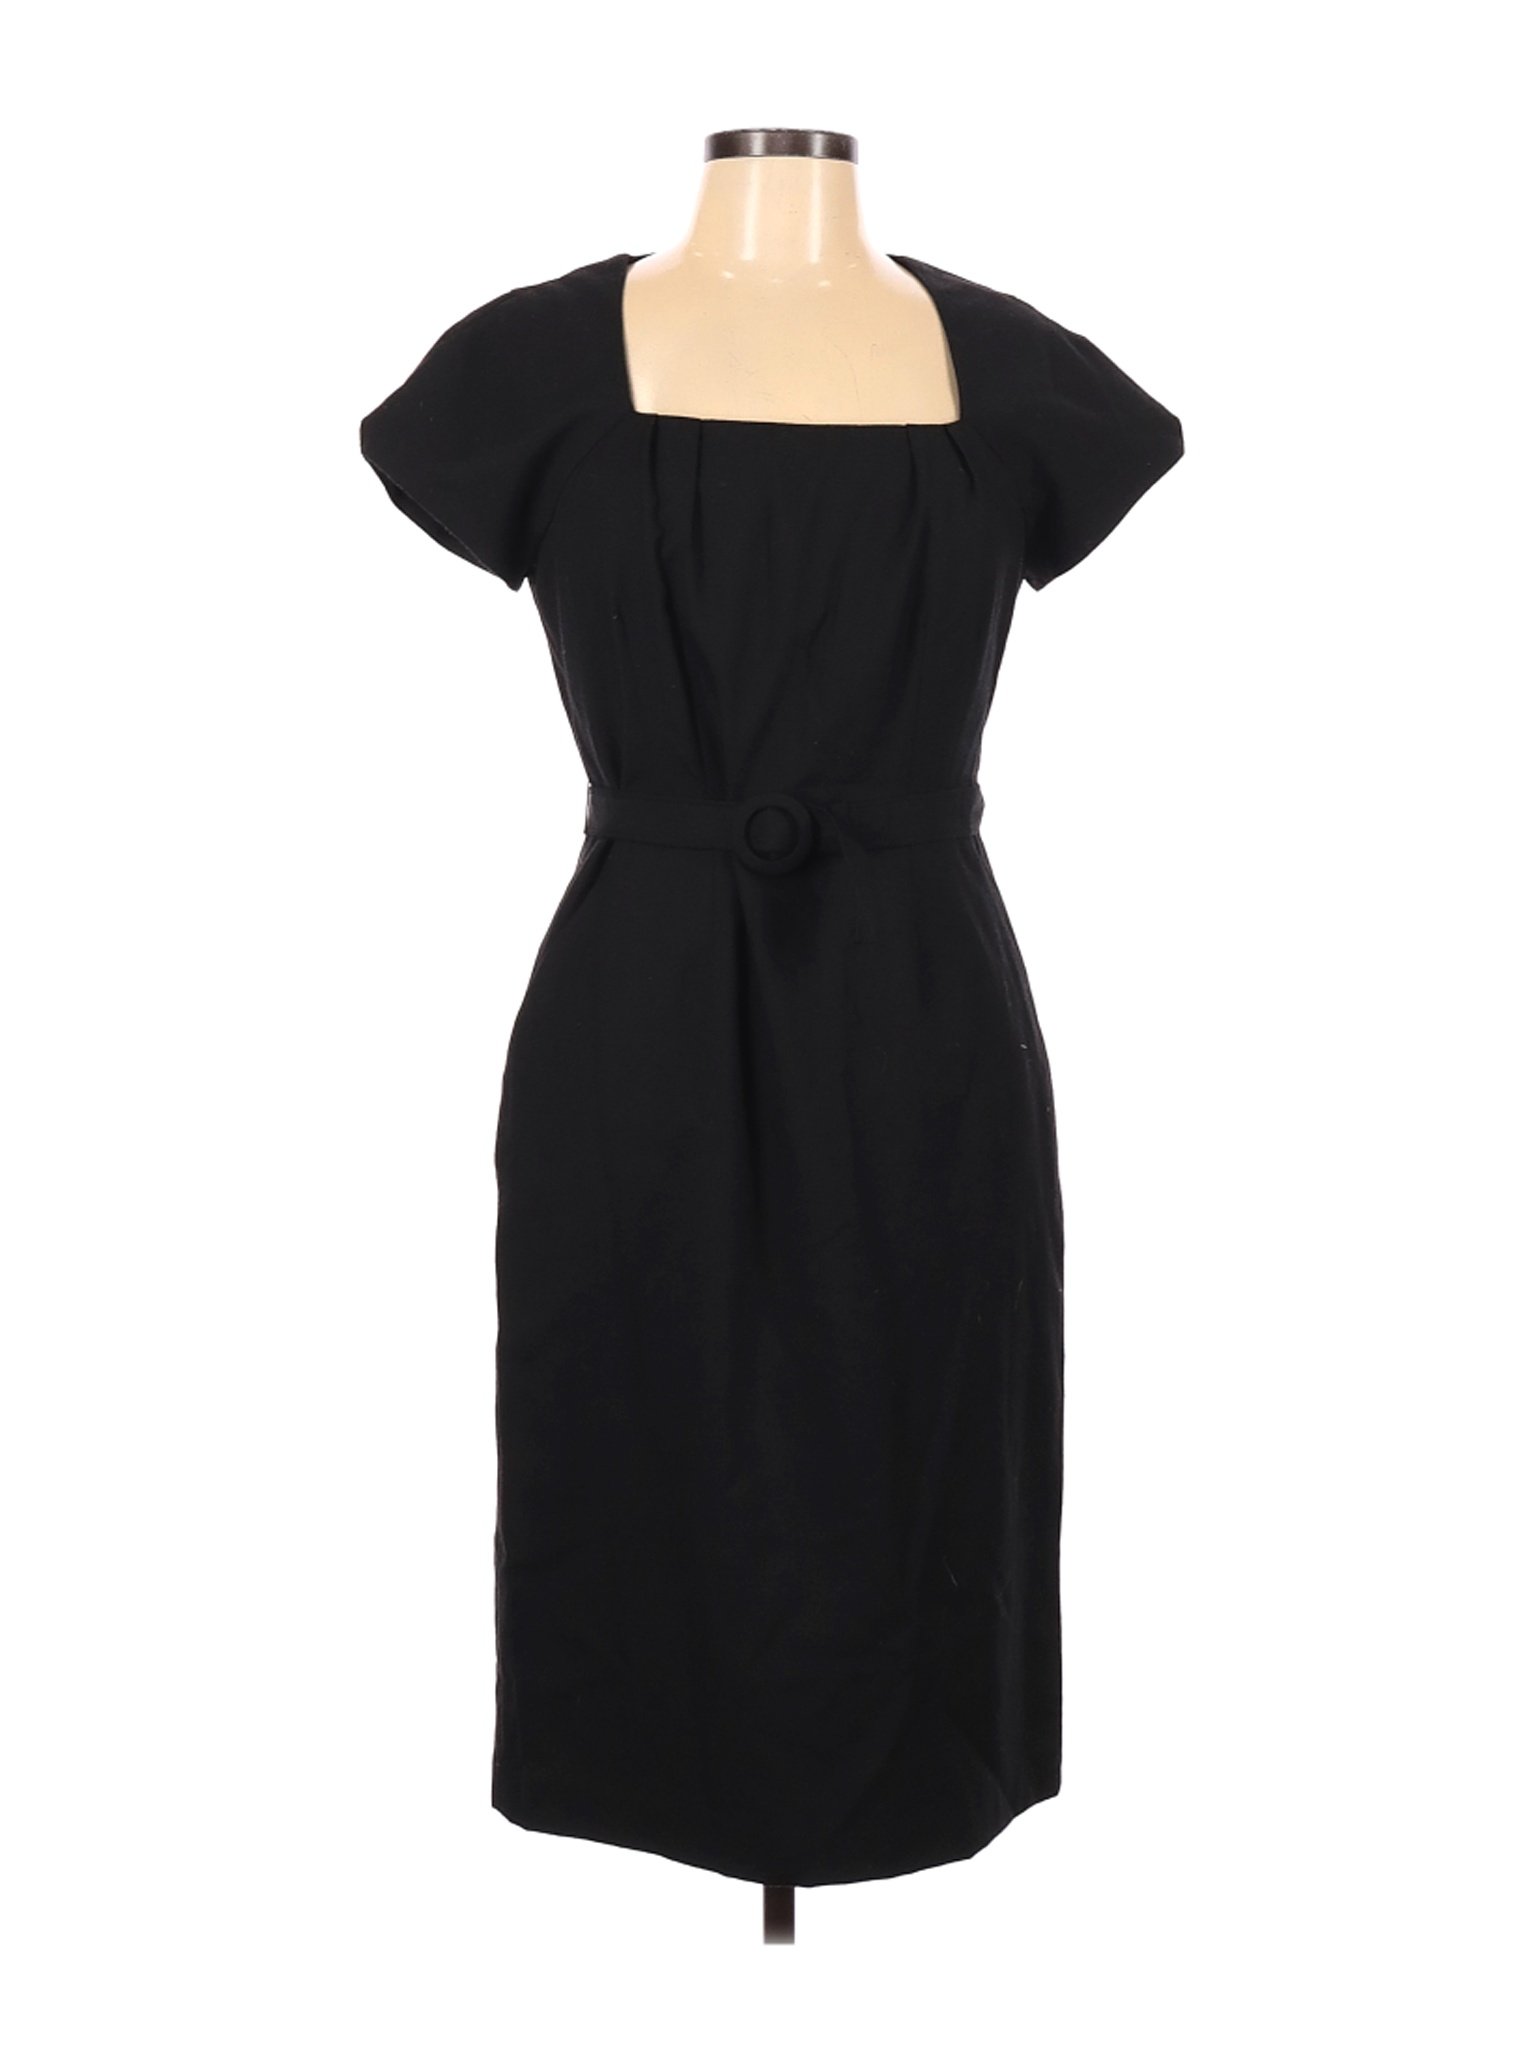 Banana Republic Factory Store Women Black Casual Dress 10 | eBay